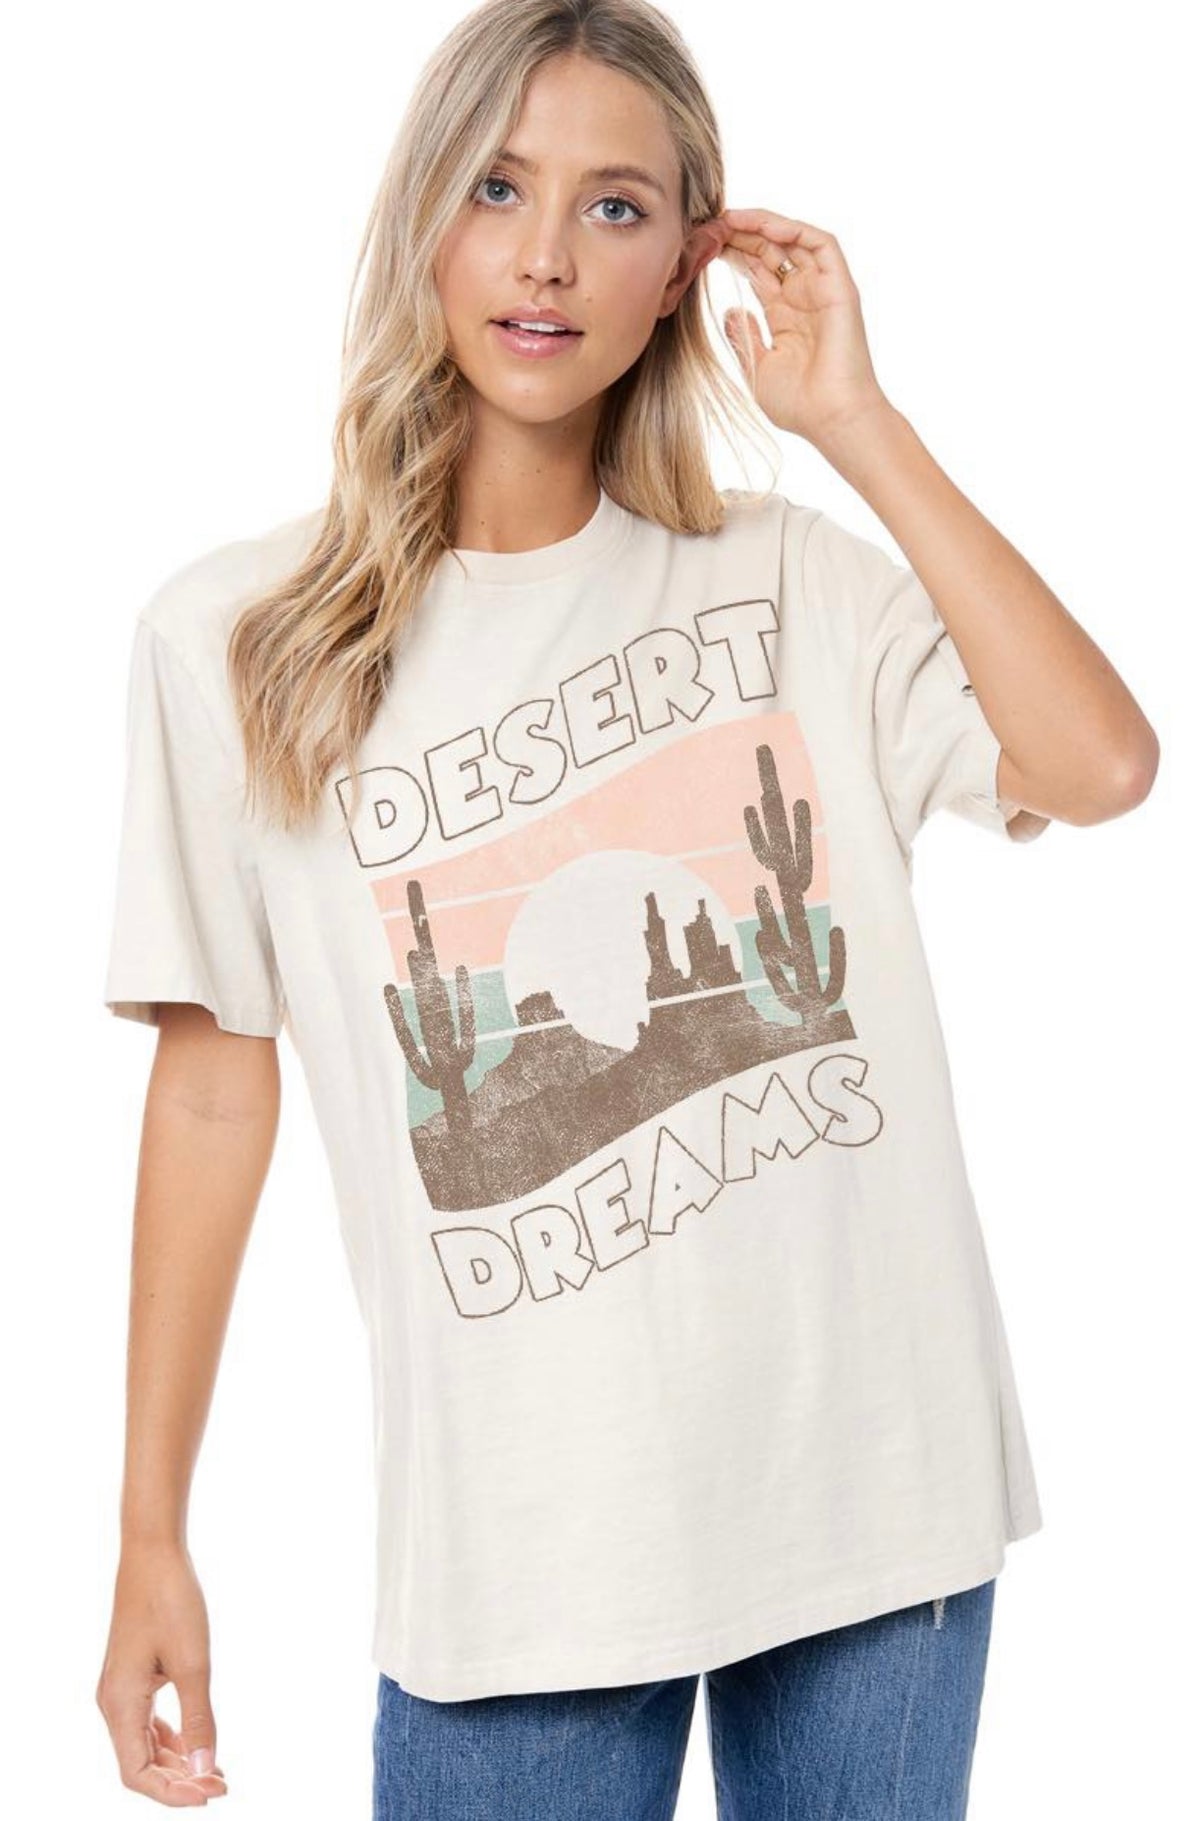 Desert Dreams Tee